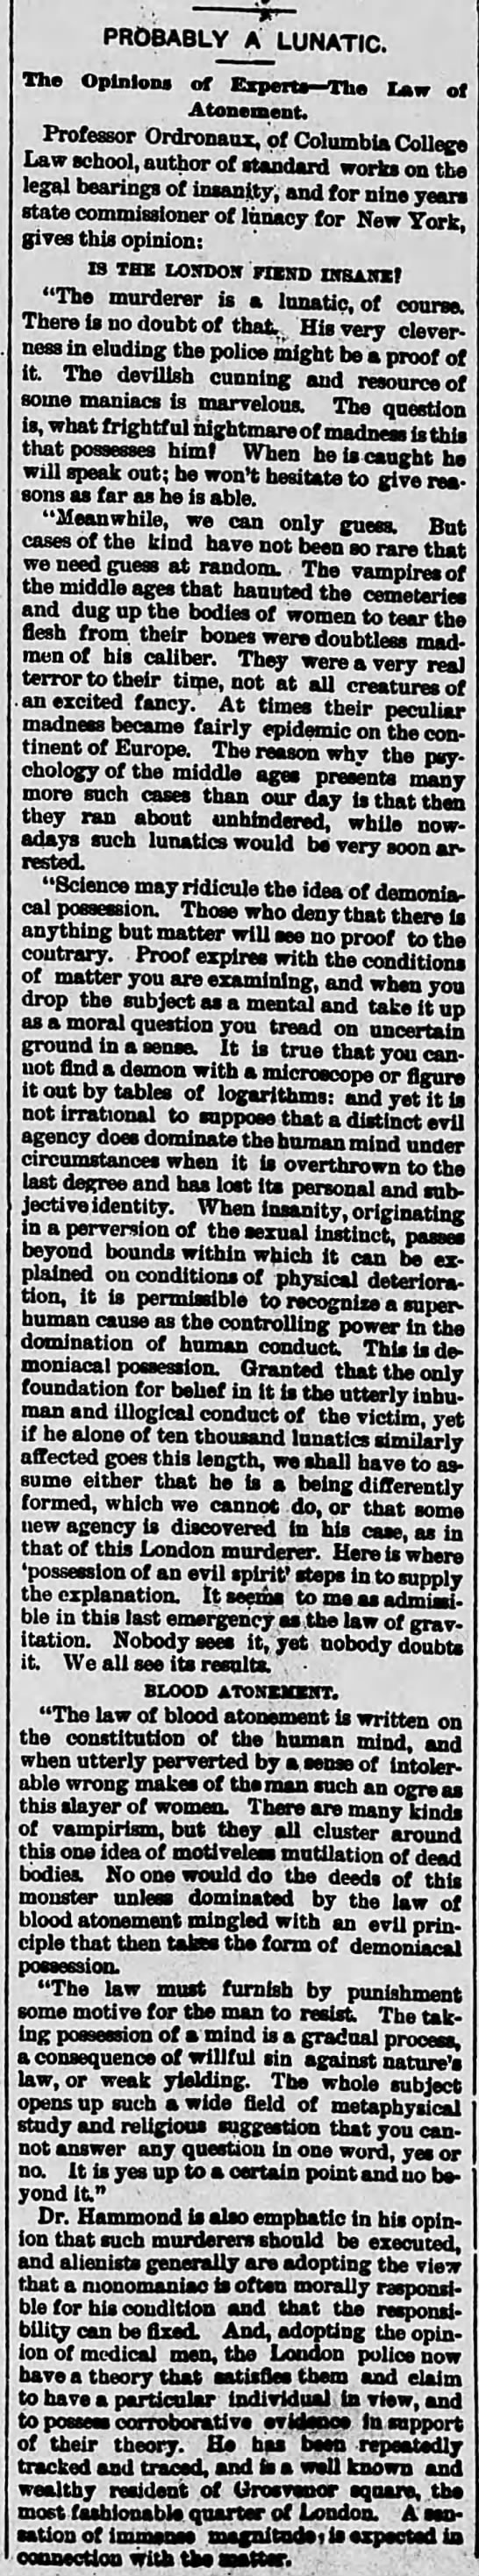 New York state commissioner of lunacy calls Jack the Ripper a lunatic, Nov 1888 - 